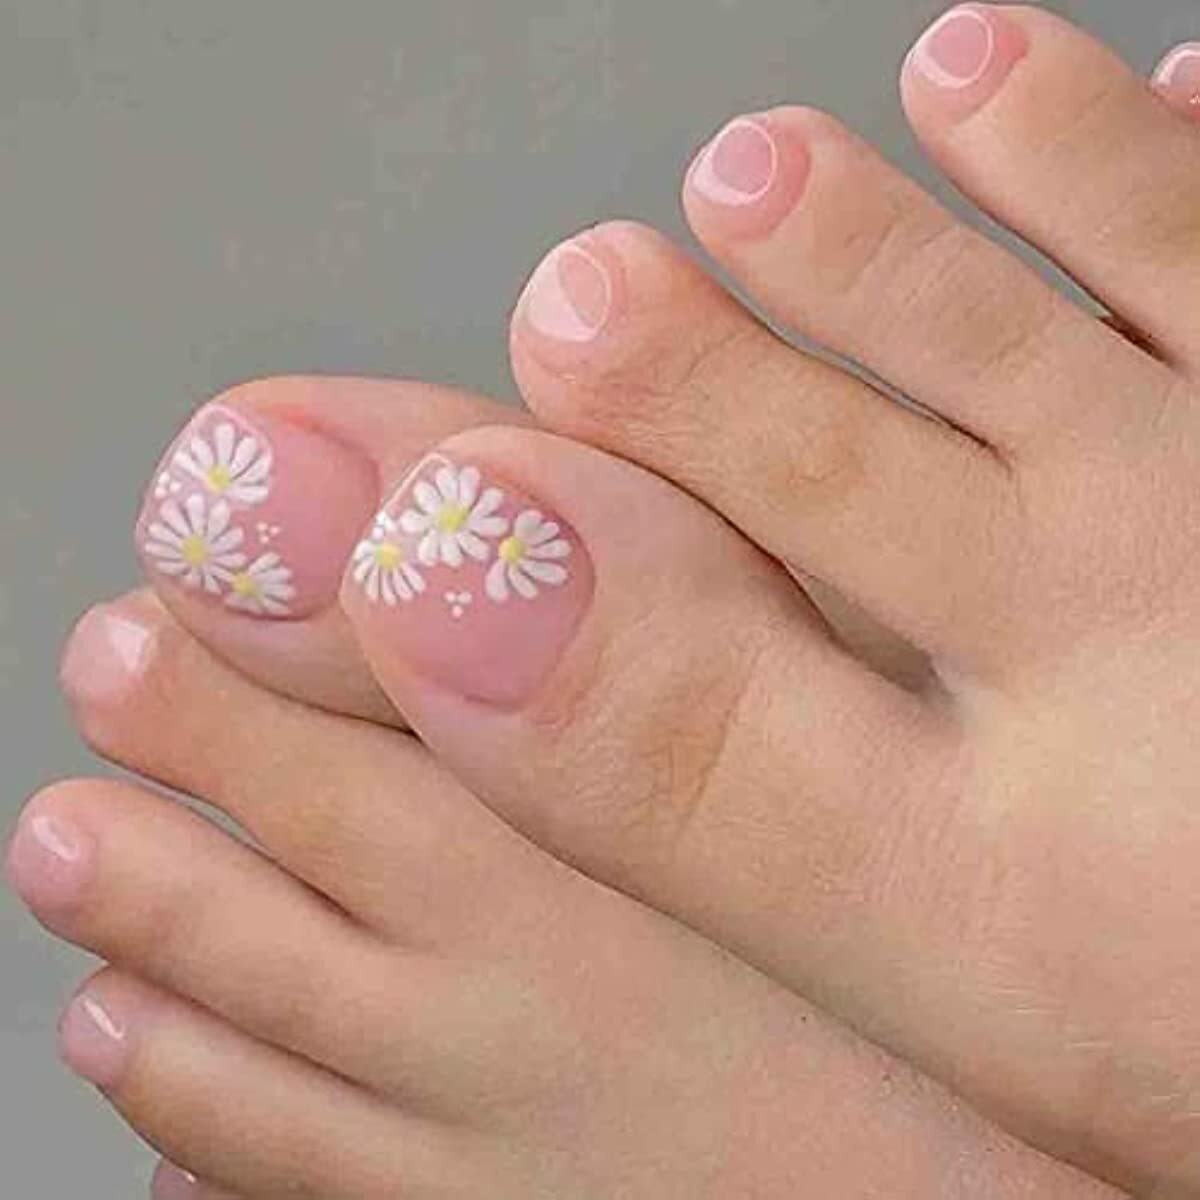 Outyua Flower Short Press on Toenails Square False Toenail Glossy Cute Acrylic Fake Toe Nails Full Cover Artificial Feet Fake Toe nail for Women and Girls 24pc (Daisy)